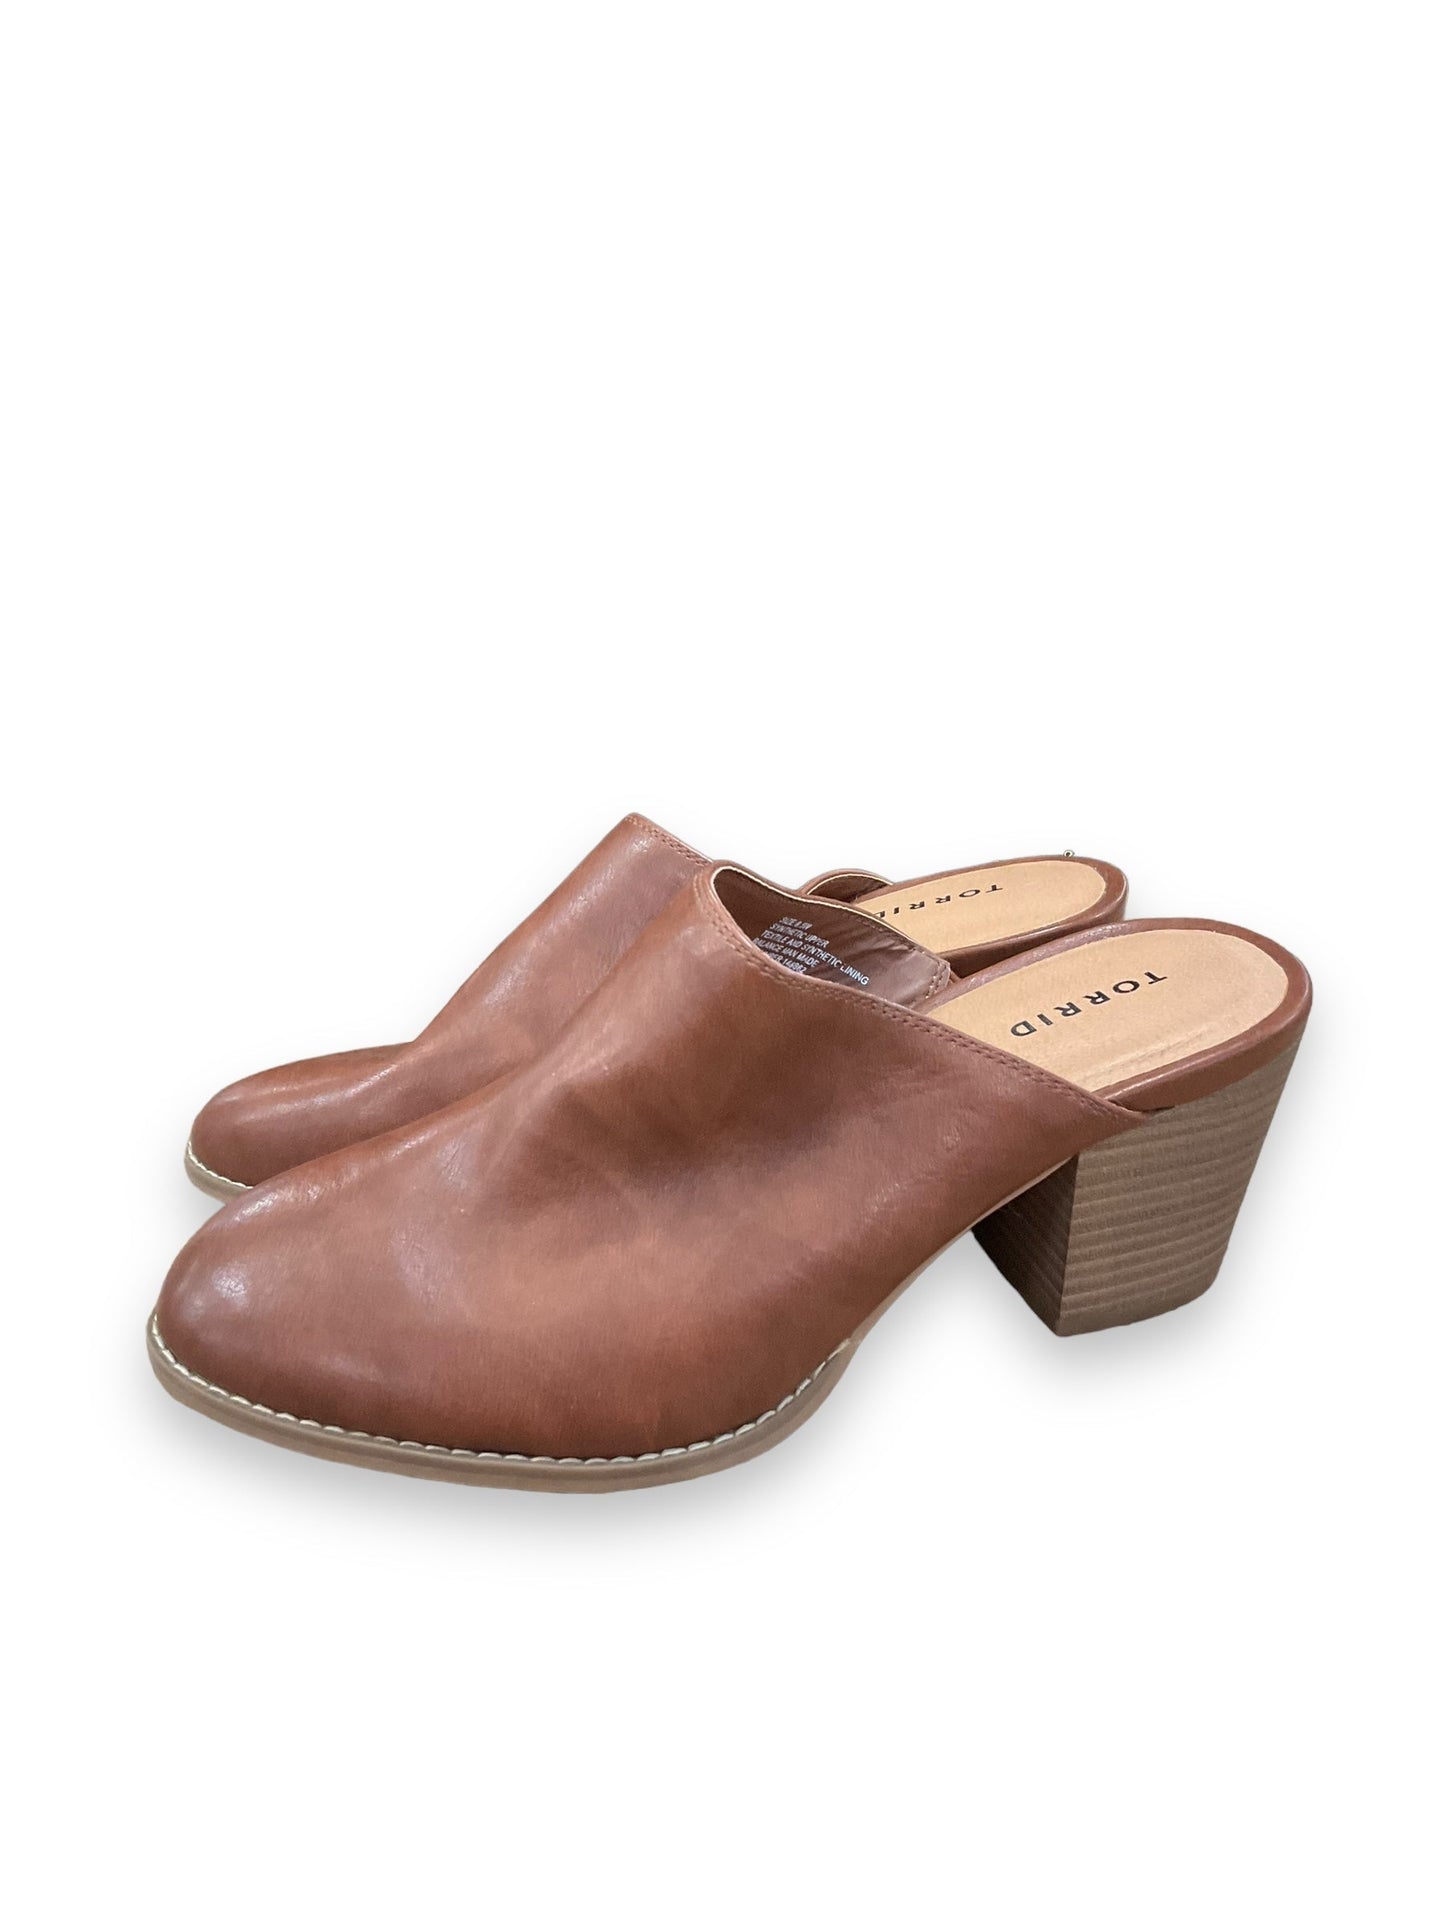 Brown Shoes Heels Block Torrid, Size 8.5